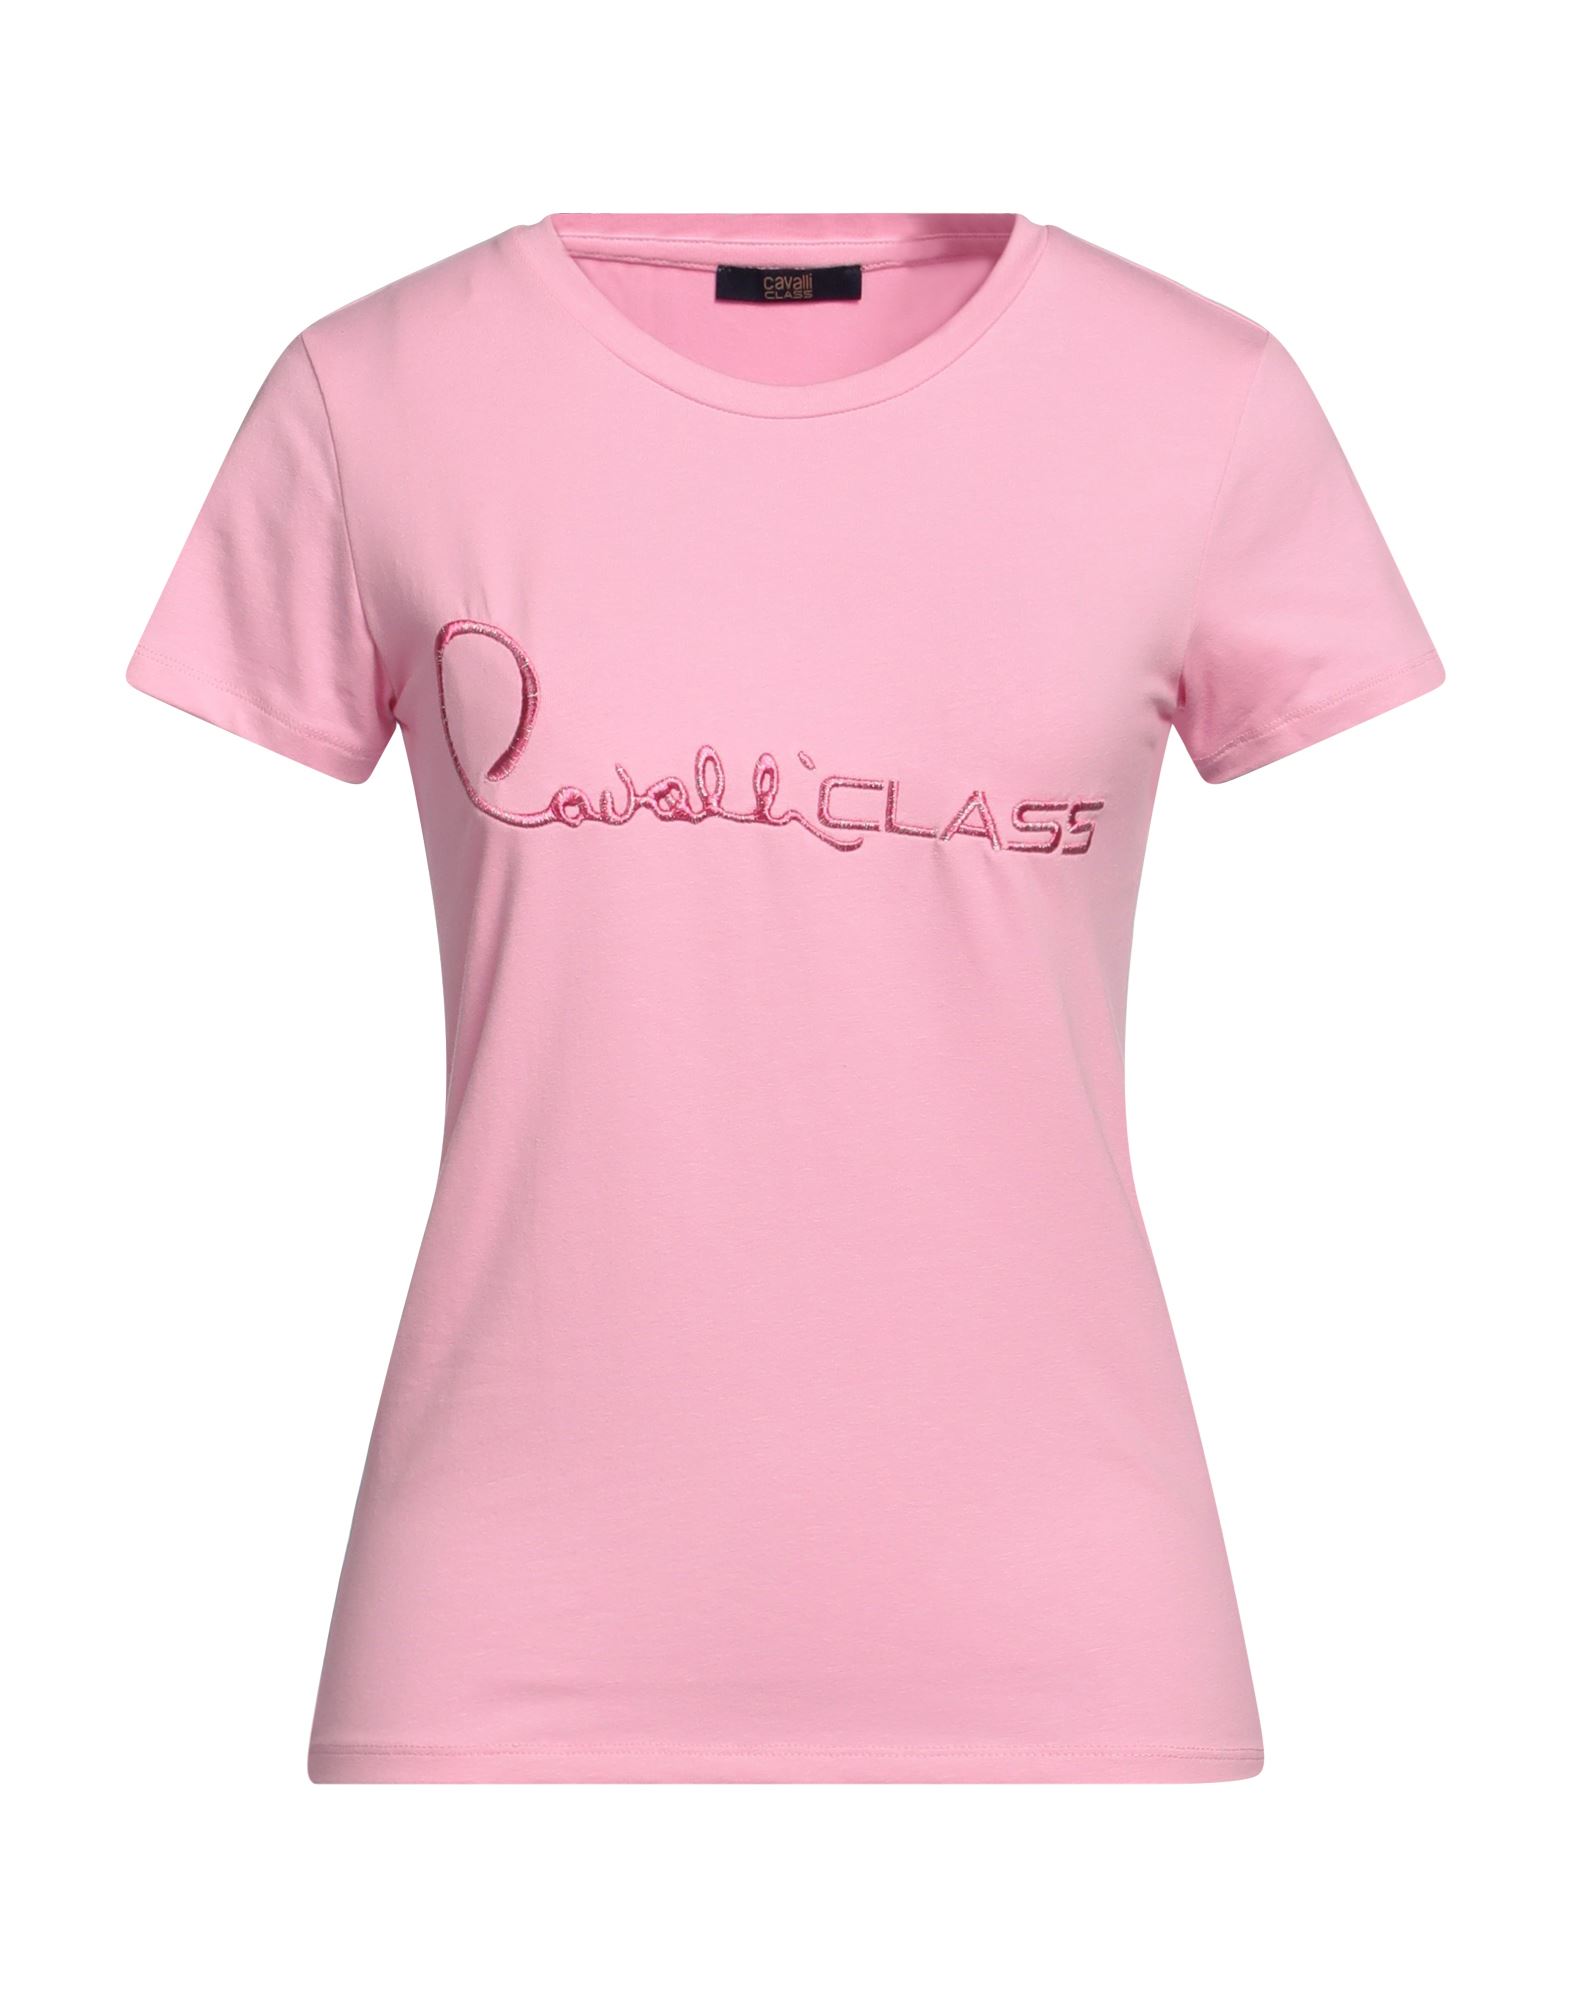 CAVALLI CLASS T-shirts Damen Rosa von CAVALLI CLASS